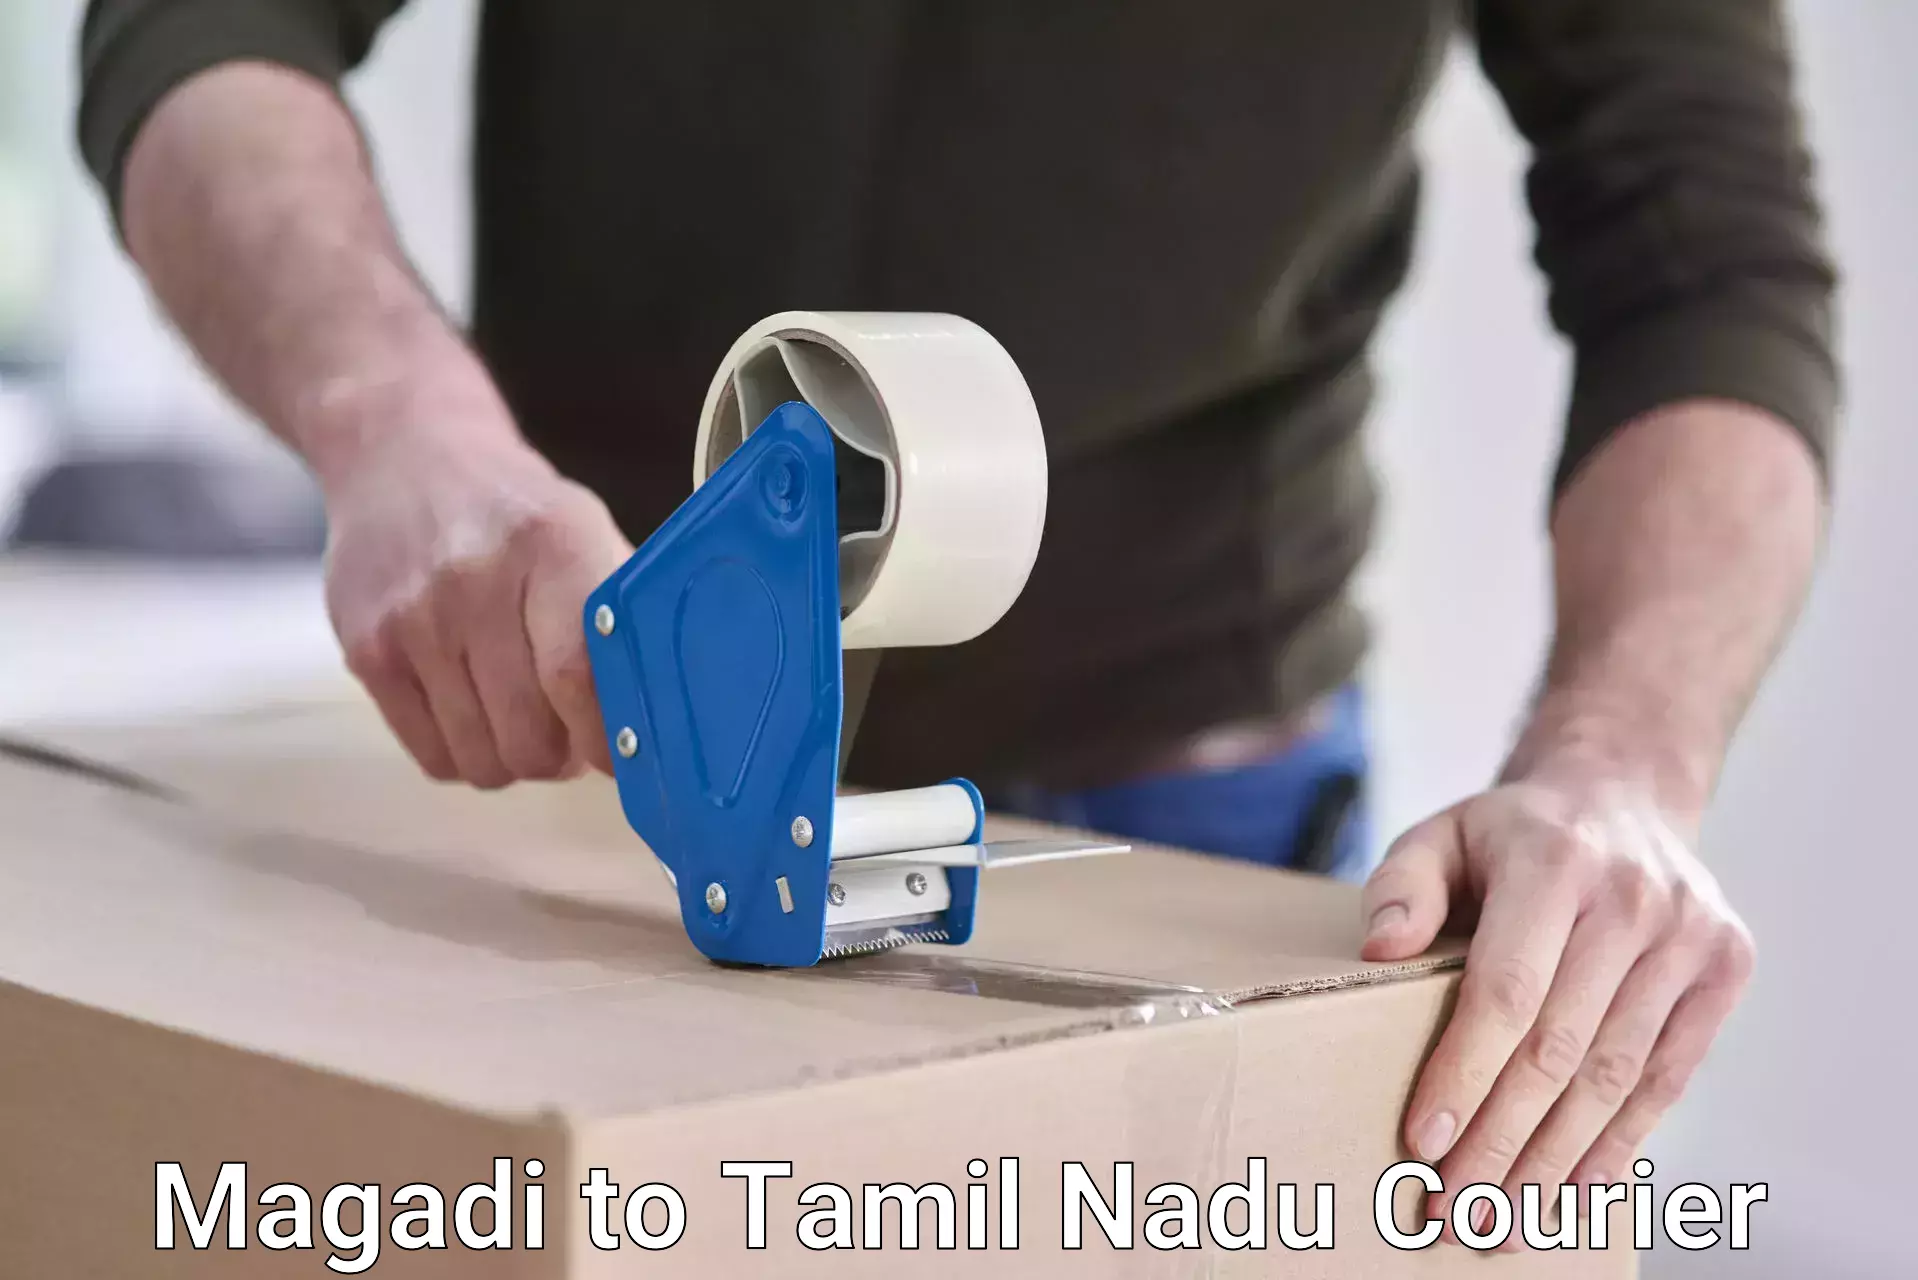 Delivery service partnership Magadi to Tamil Nadu